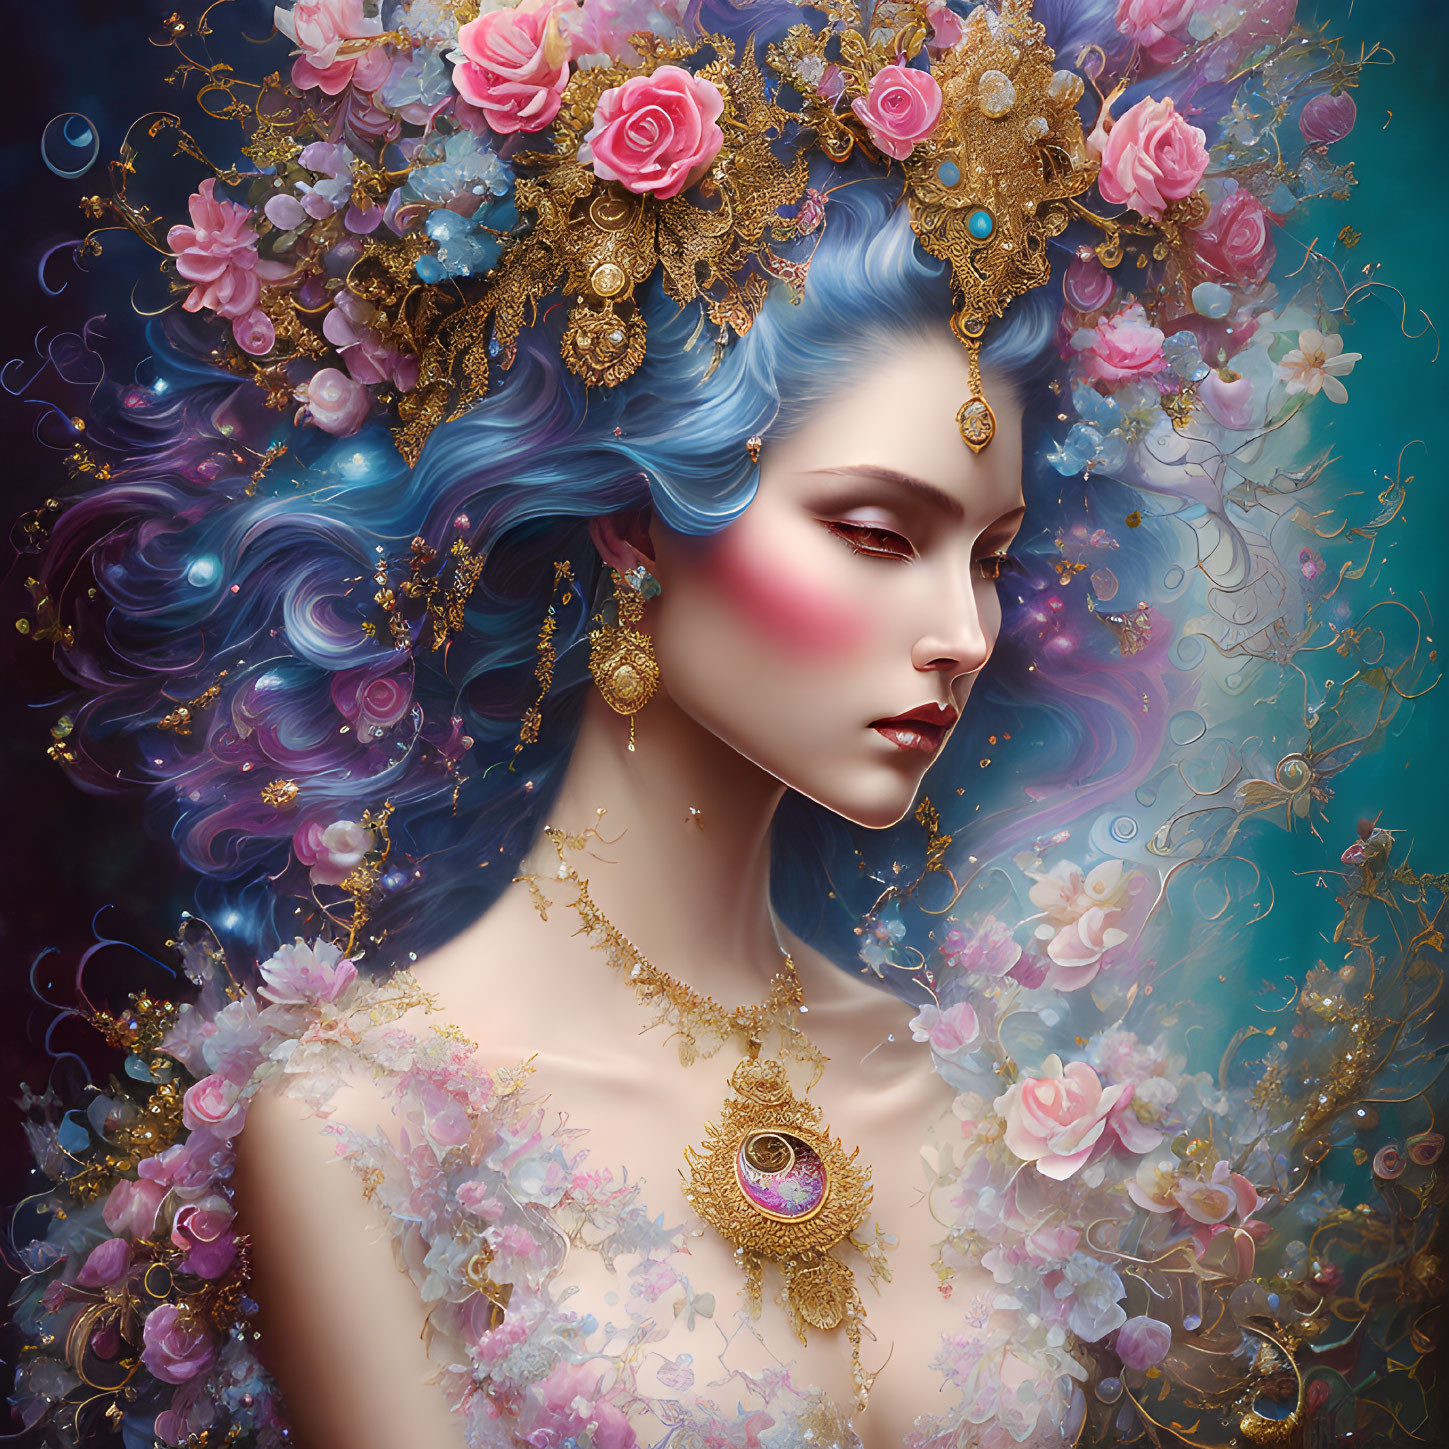 Digital artwork: Woman with blue wavy hair, gold & floral headpiece, rosy cheeks,